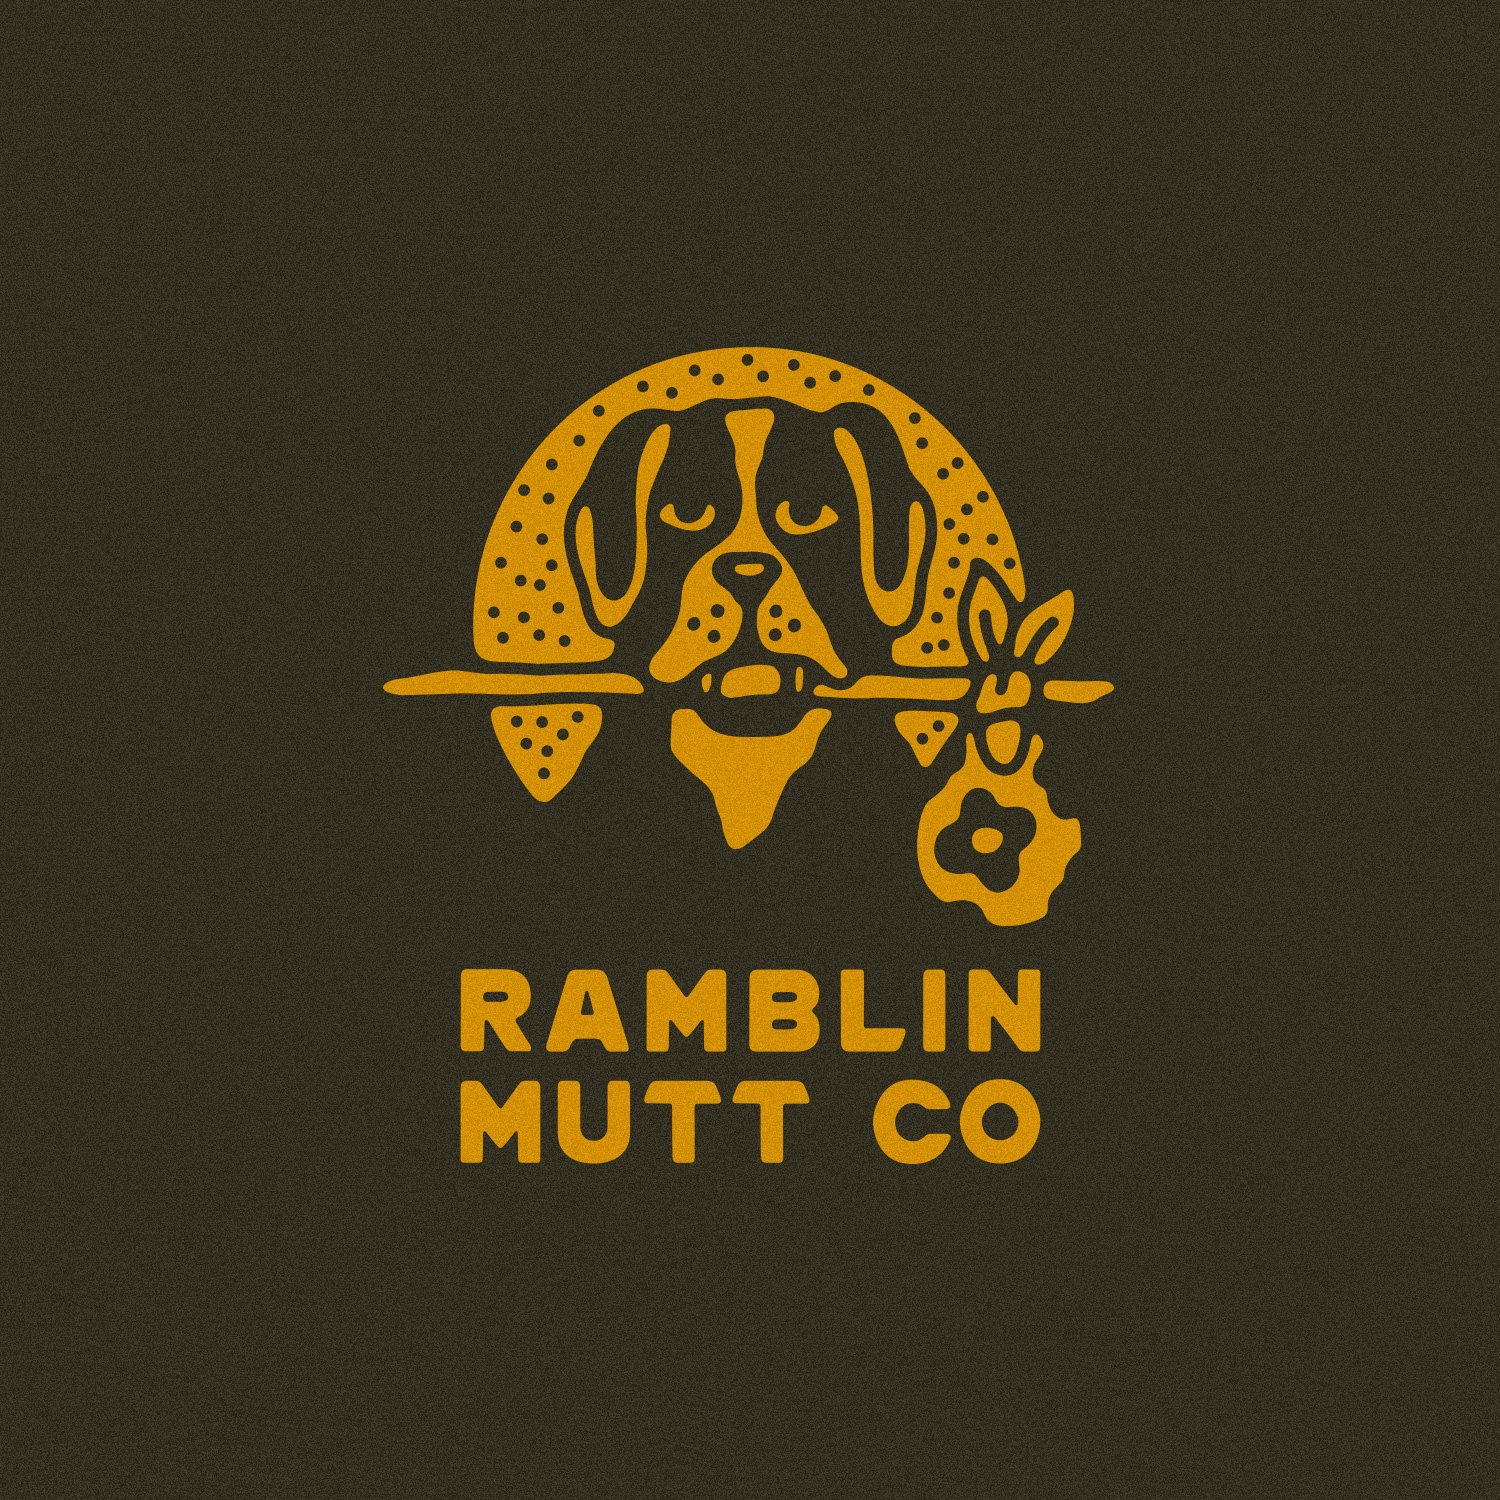  Ramblin’ Mutt Co logo design by Cactus Country. 